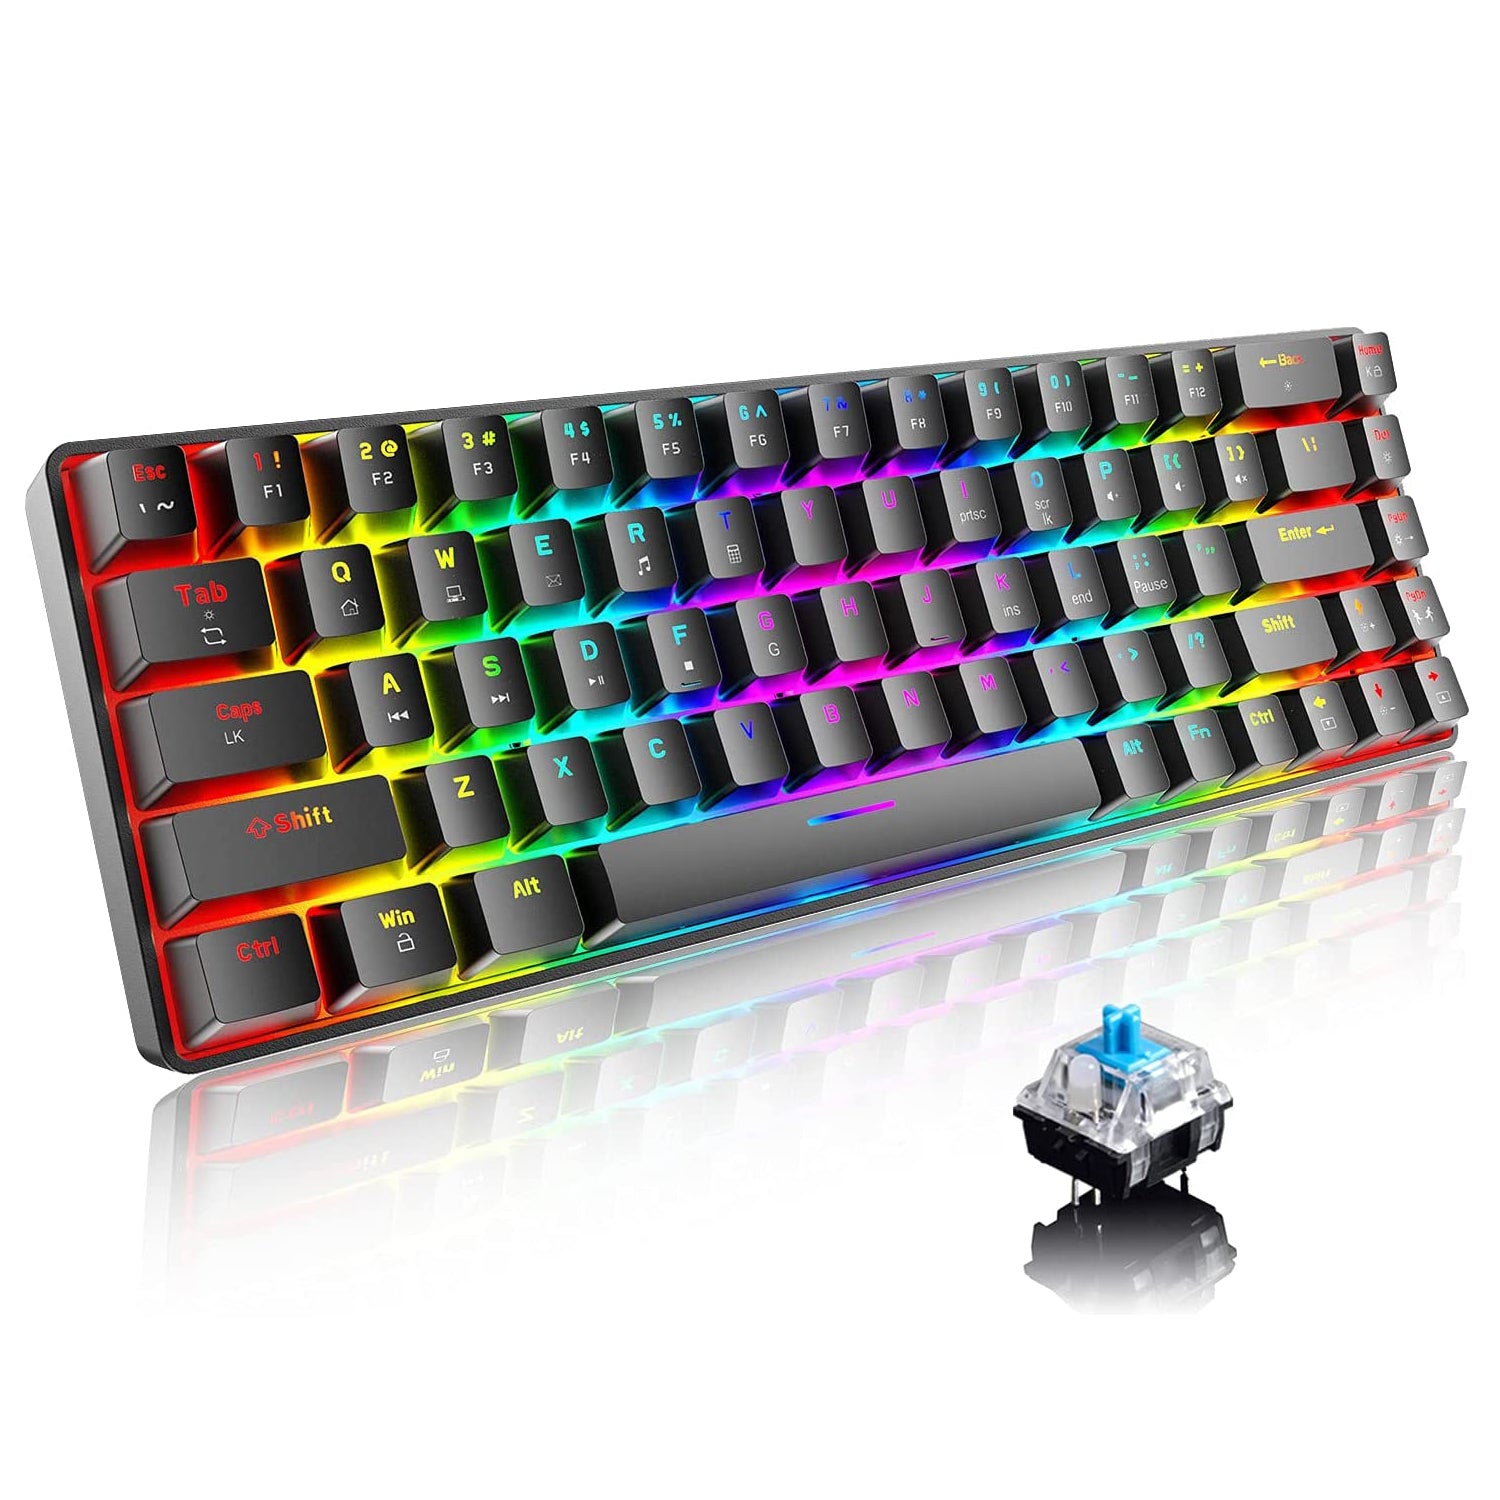 ZIYOU LANG T8 60% Mechanical Mini Gaming Keyboard Compact Type C Wired